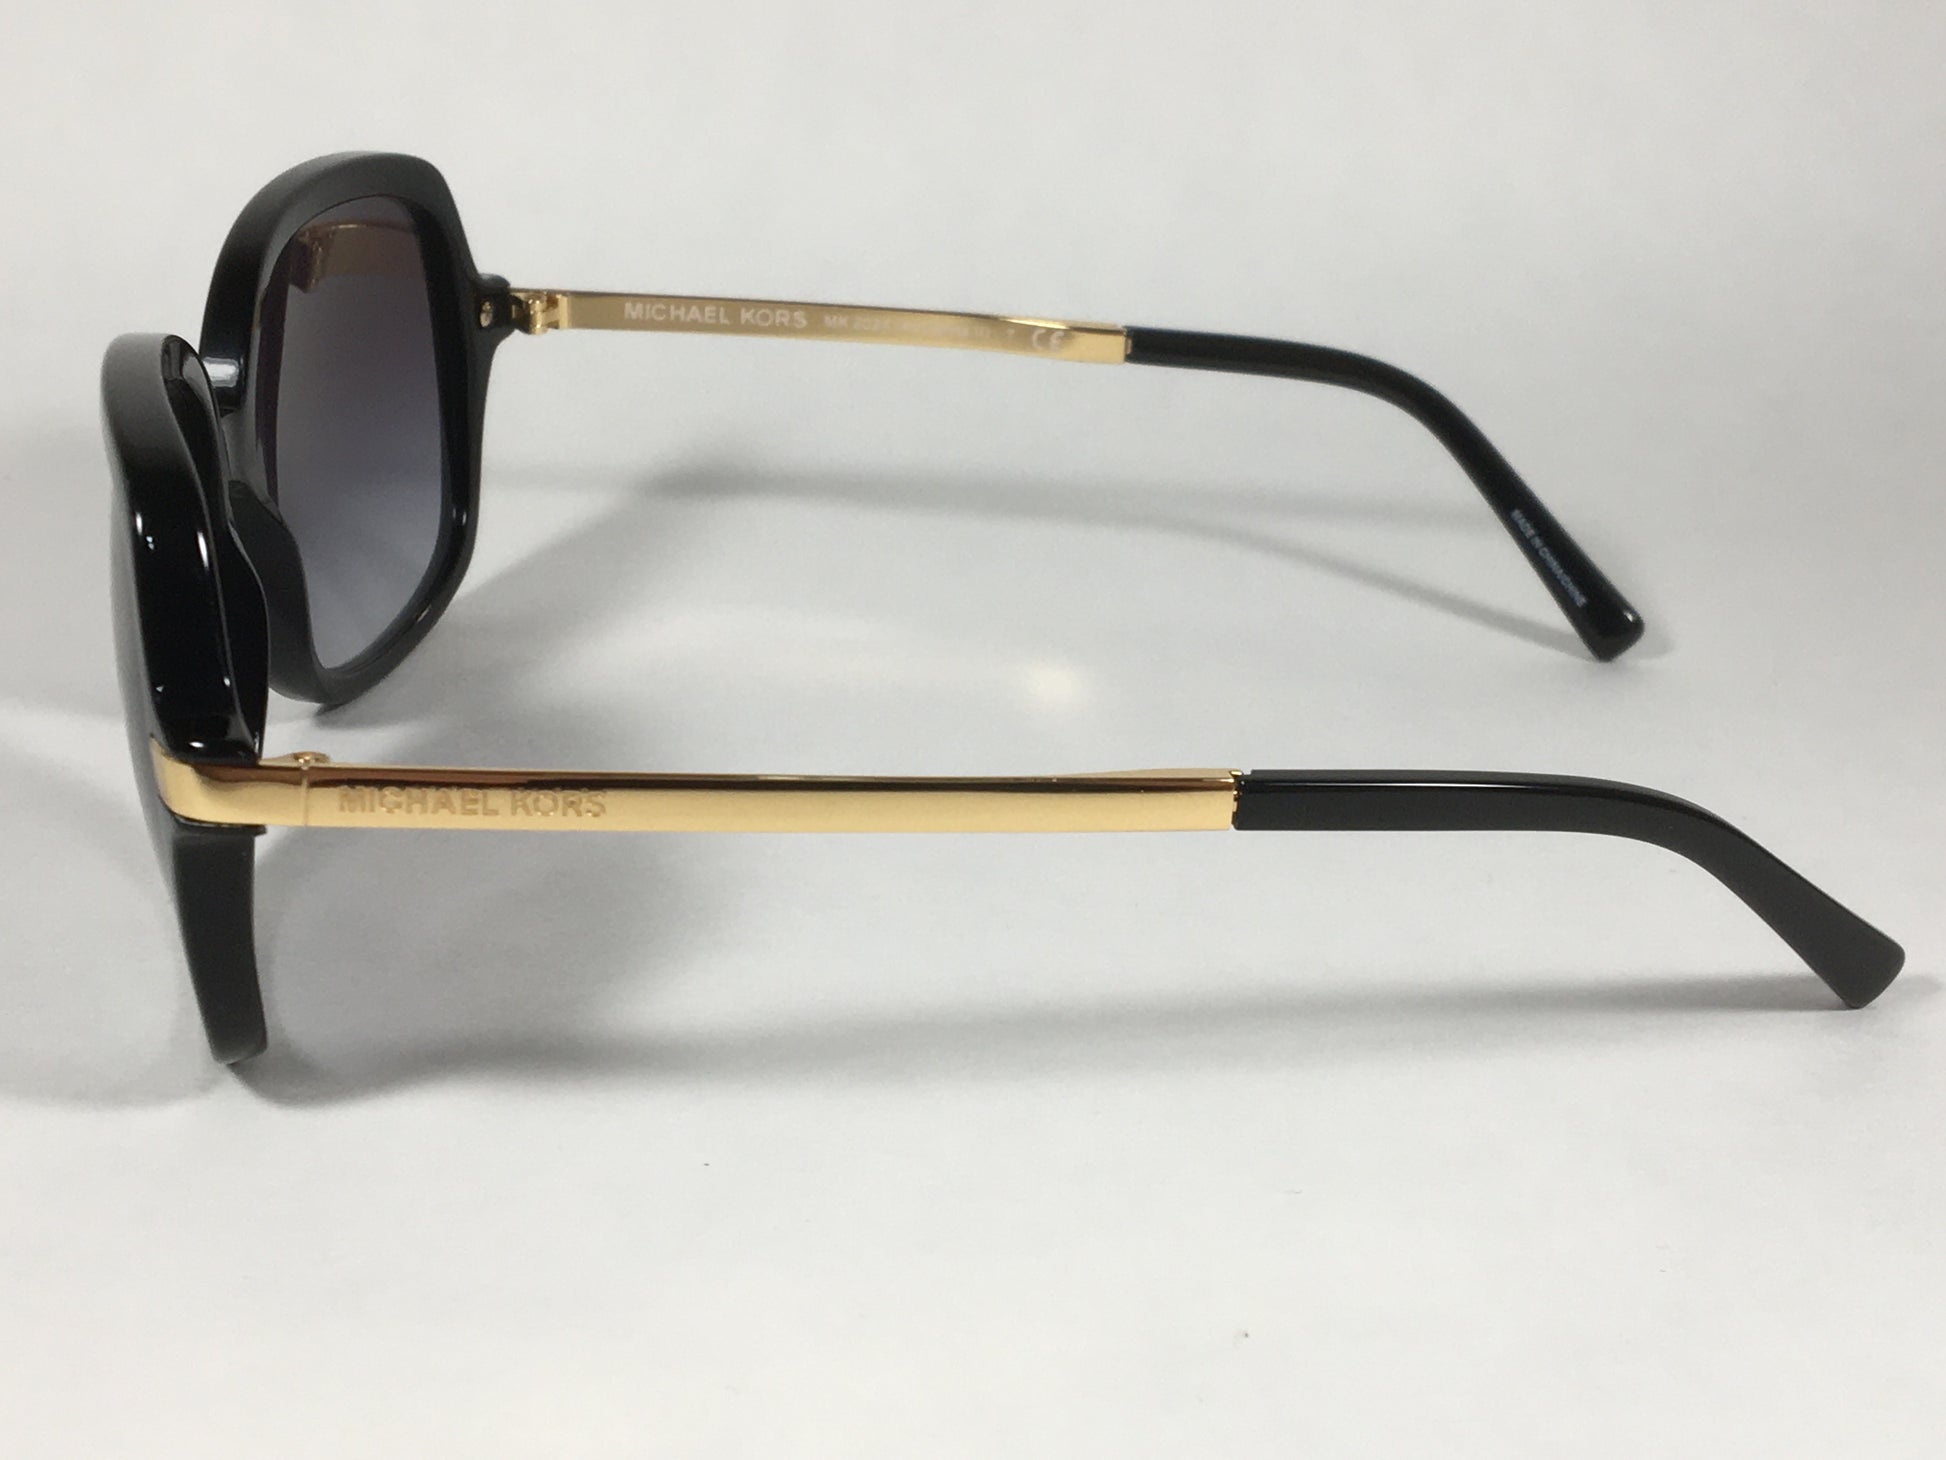 Michael Kors Adrianna II Square Sunglasses Shiny Black Gold Gray Gradient Lens MK-2024 - Sunglasses